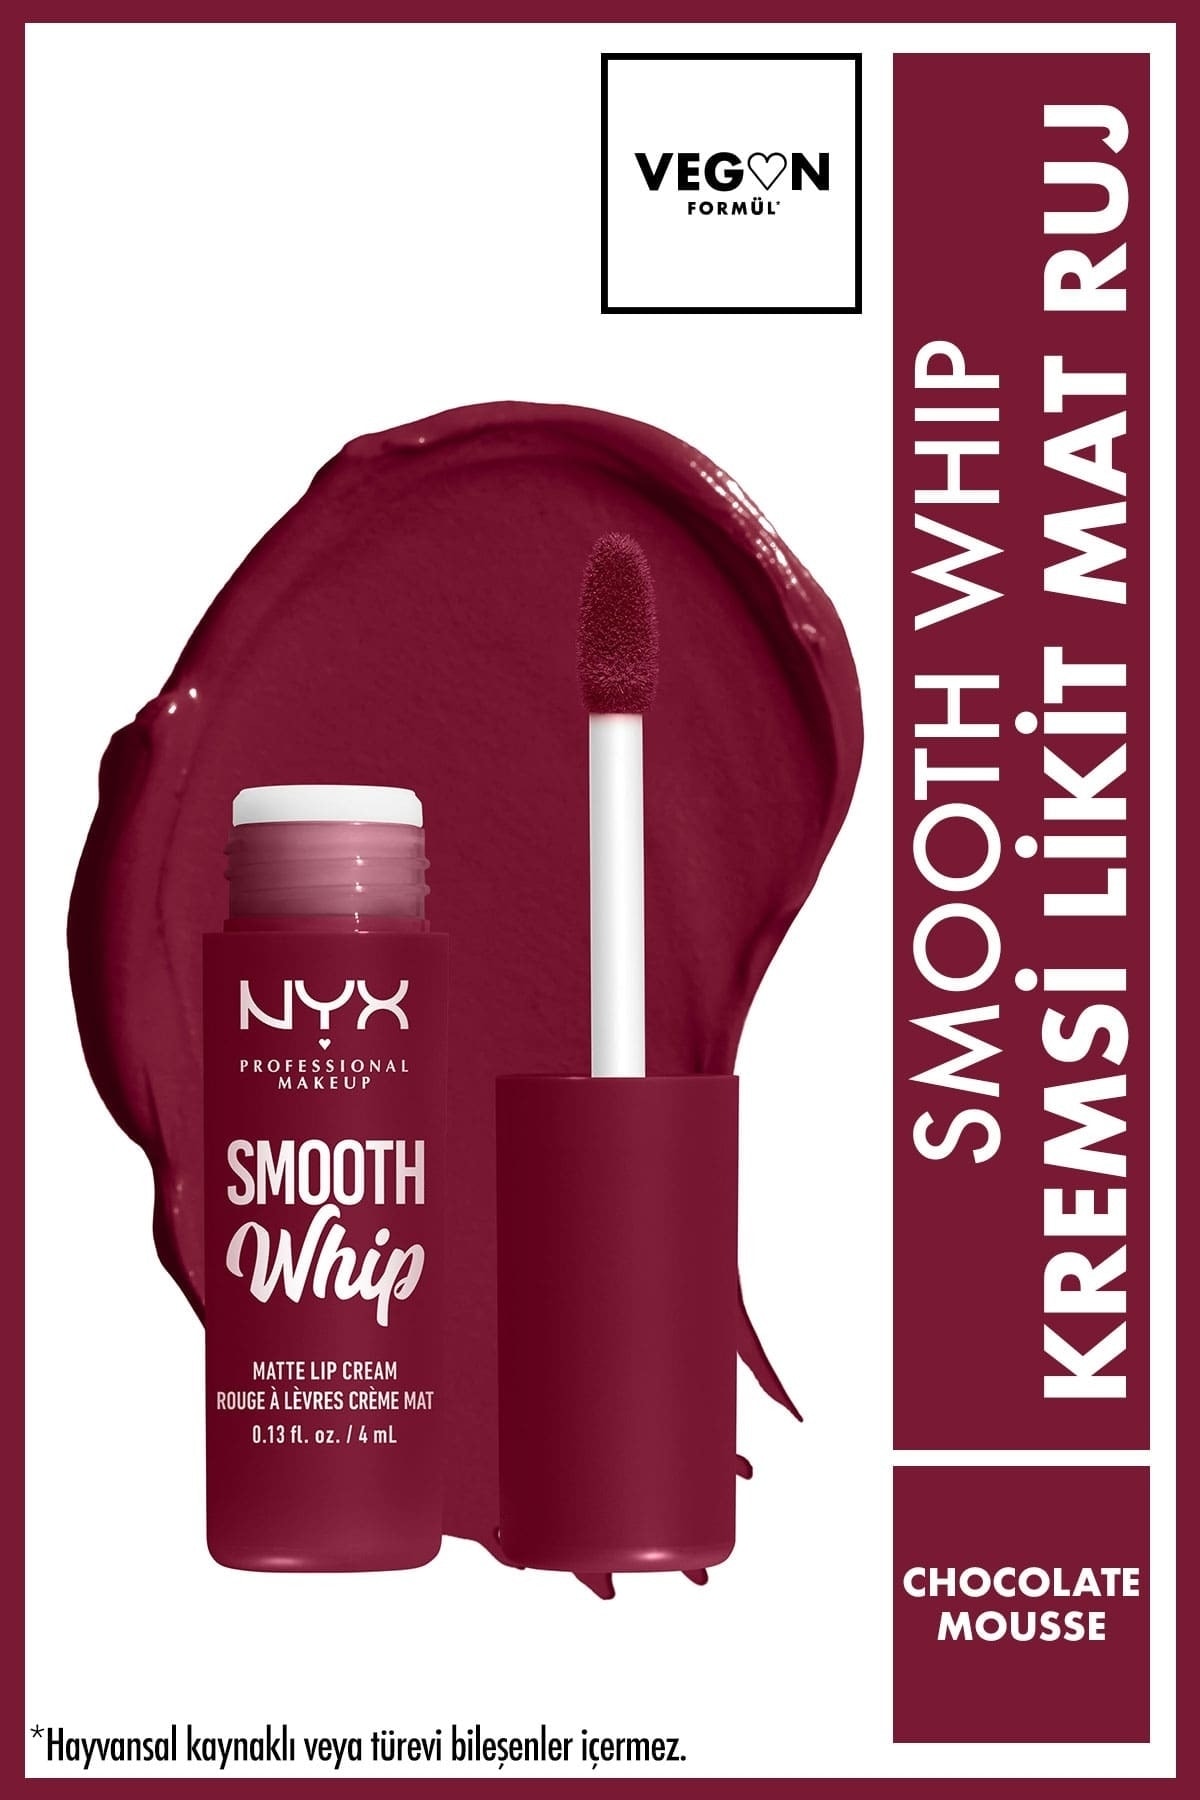 NYX Professional Makeup Smooth Whip Kremsi Likit Mat Ruj - Chocolate Mousse